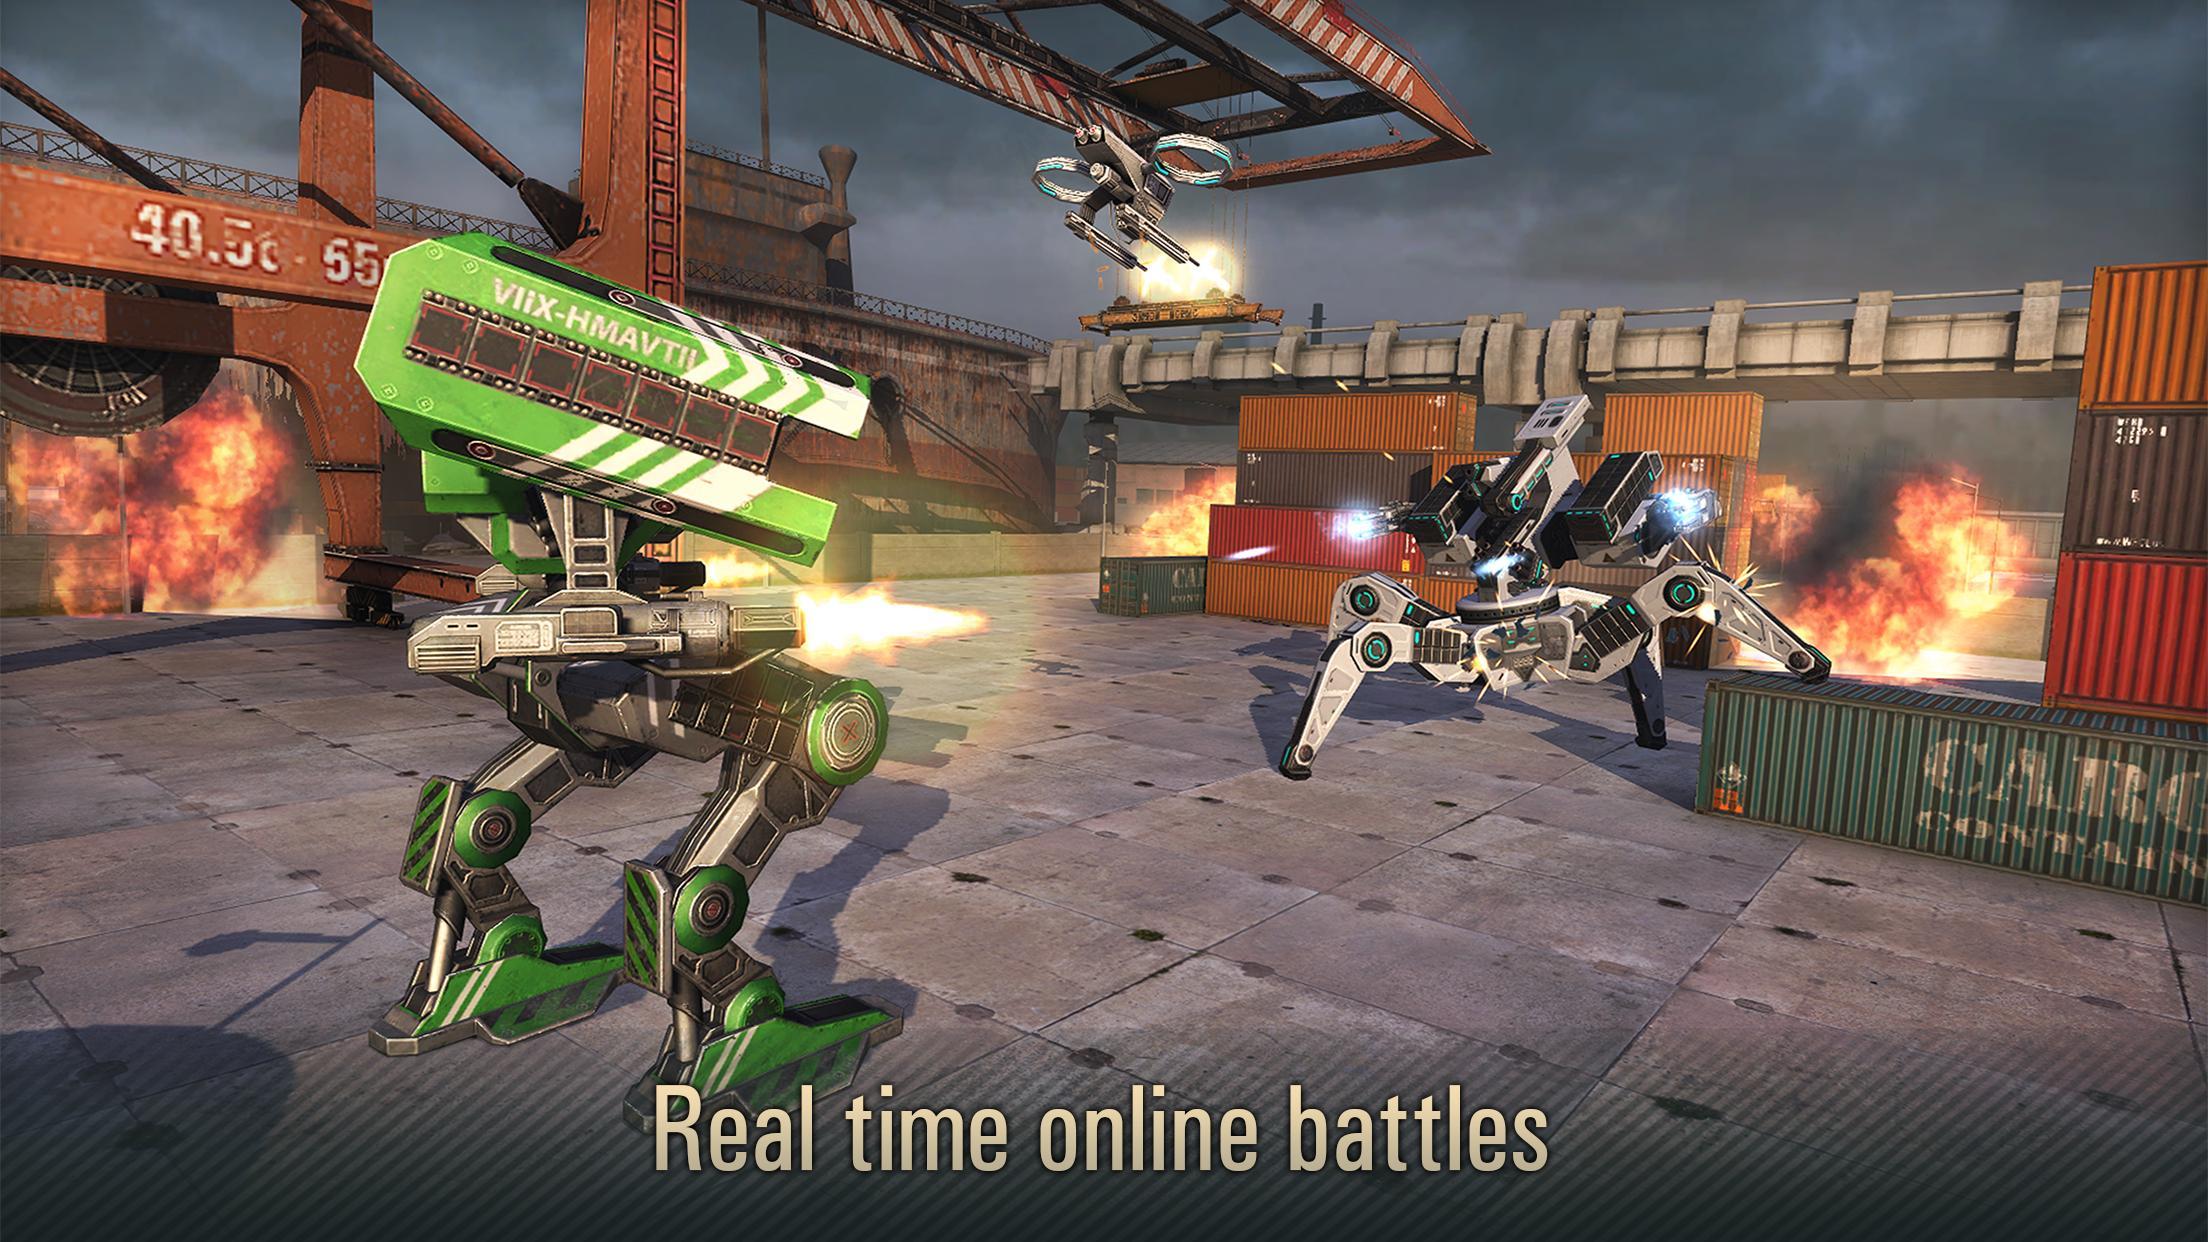 Битва роботов мини. Battle Robots игра. Wwr: World of Warfare Robots. Боевые роботы игра на андроид.